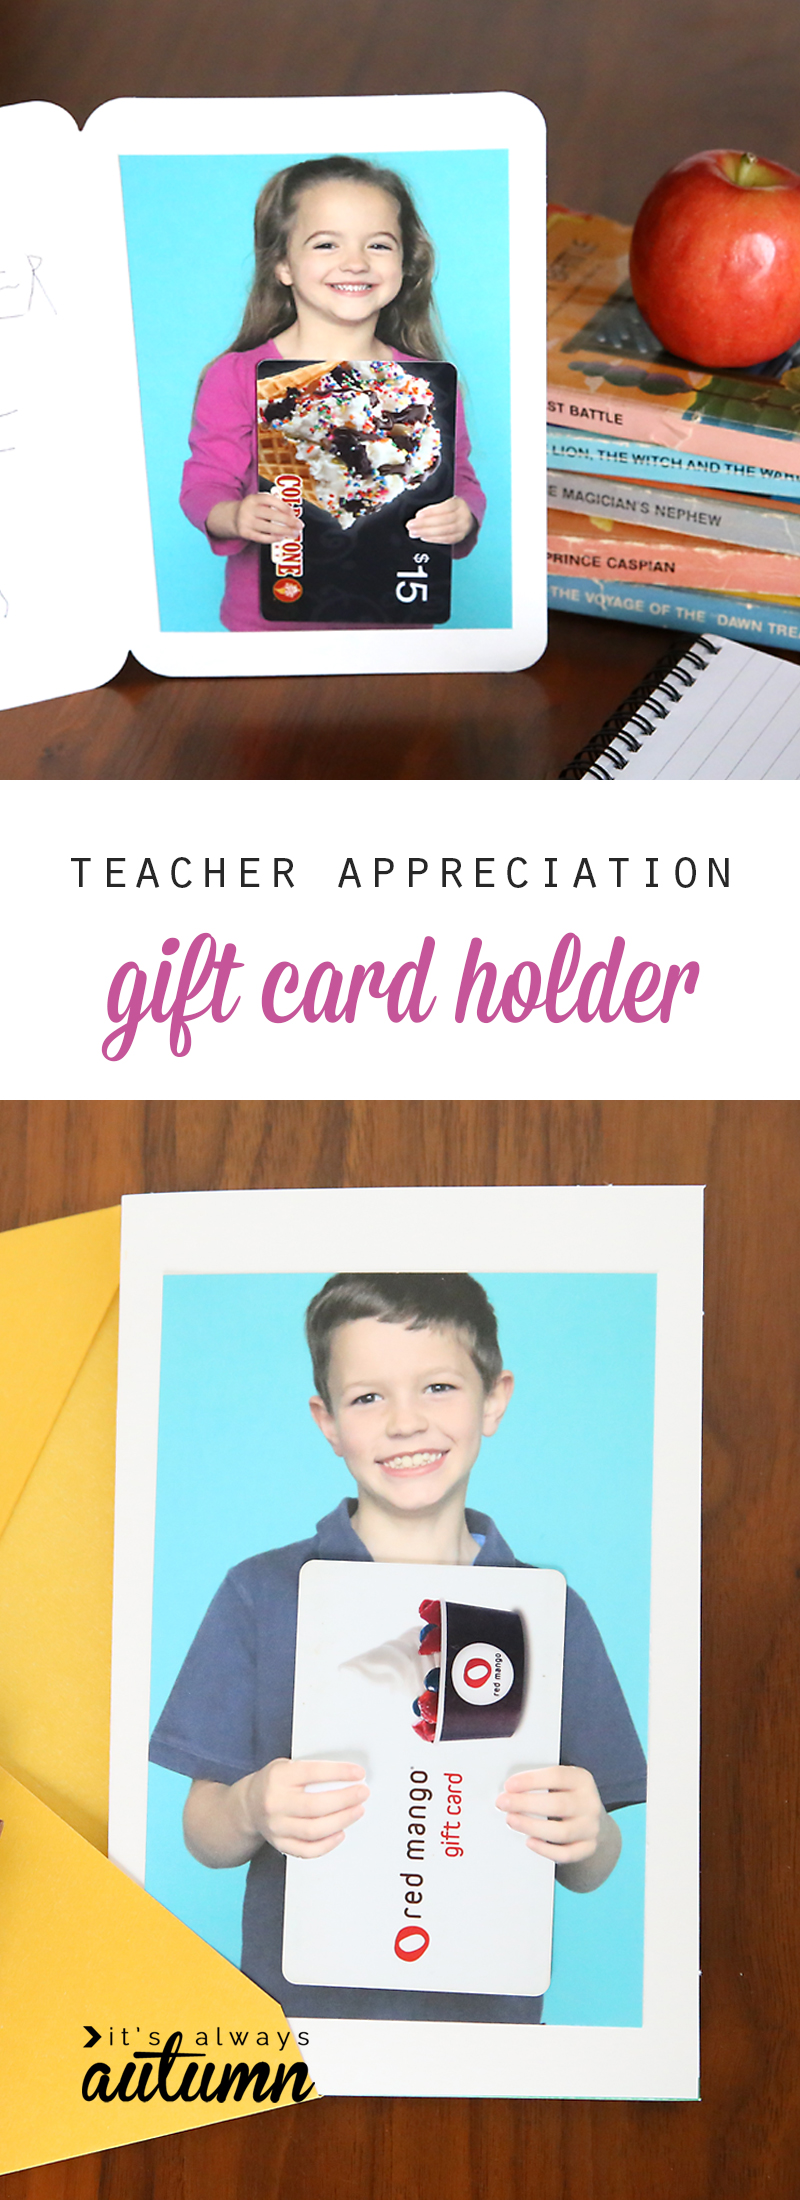 Teacher appreciation photo gift card holder